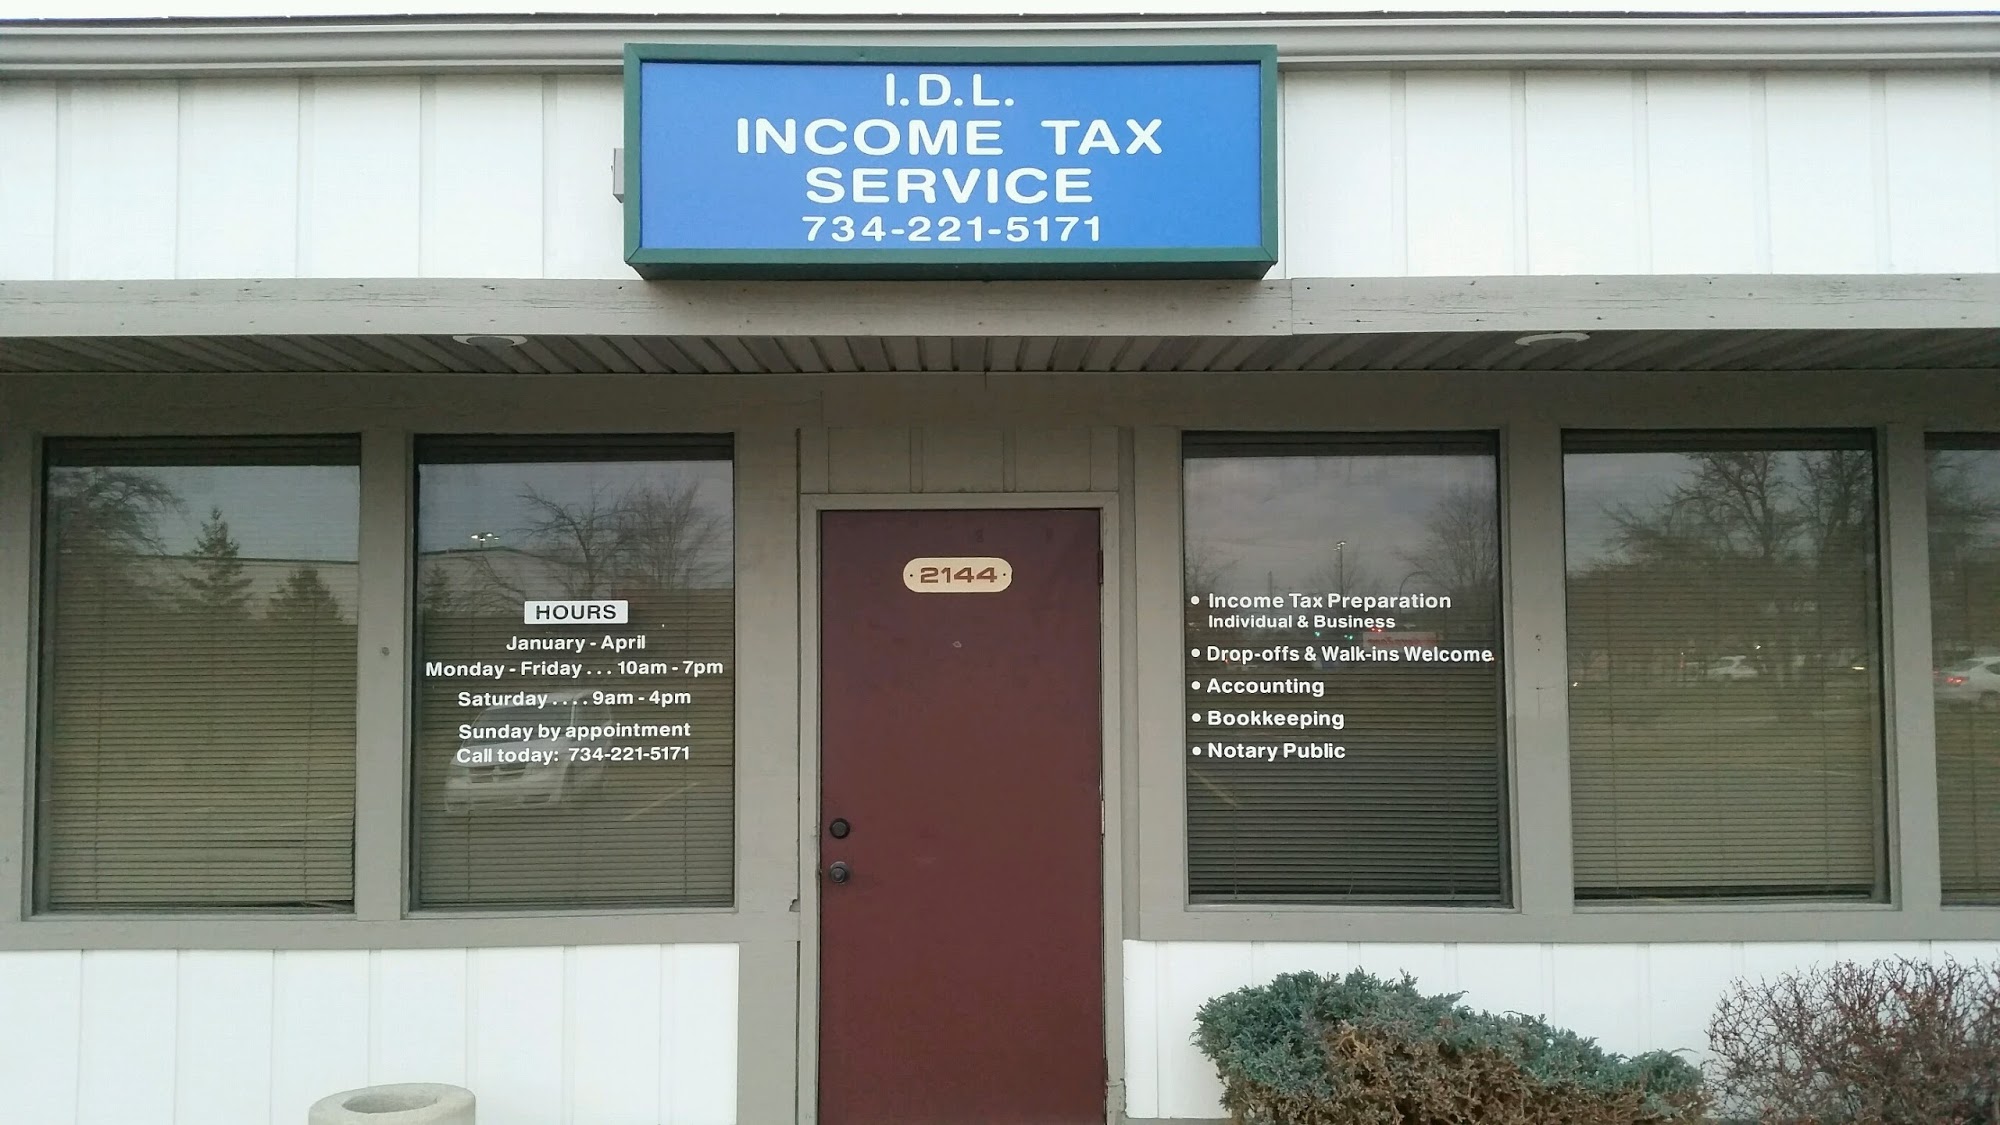 I.D.L. Income Tax Service